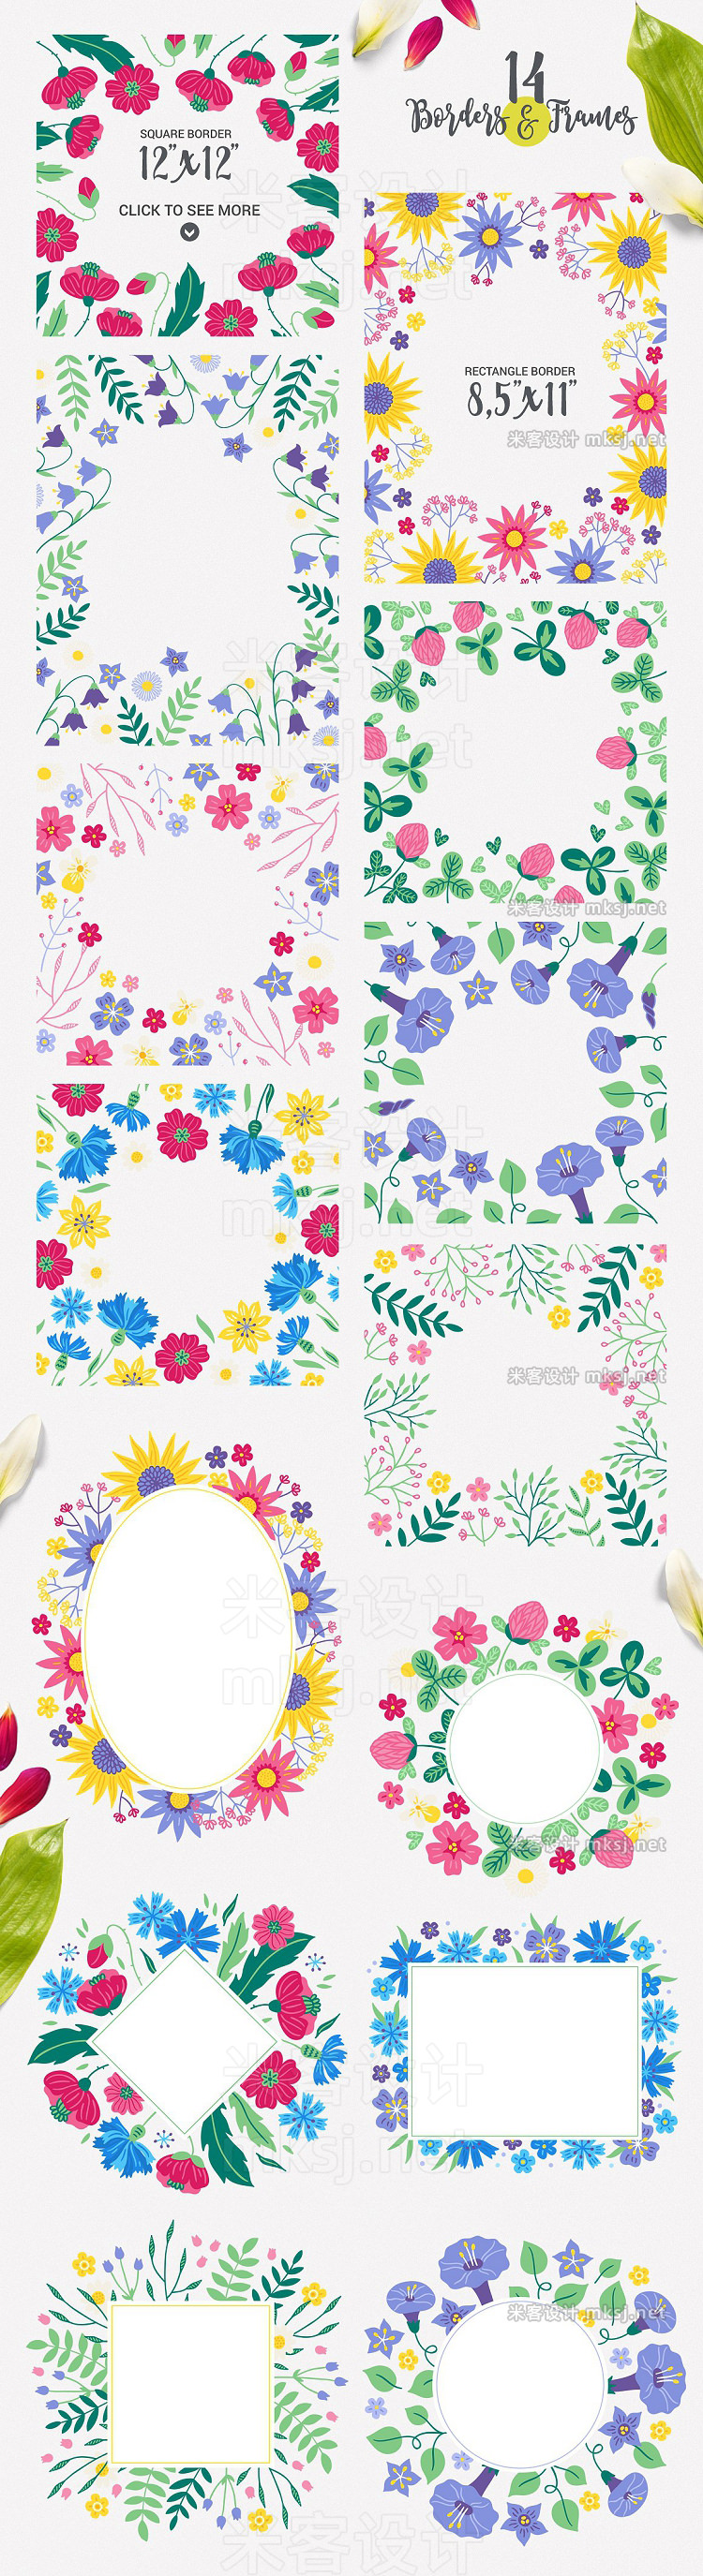 png素材 Floral Meadow Kit